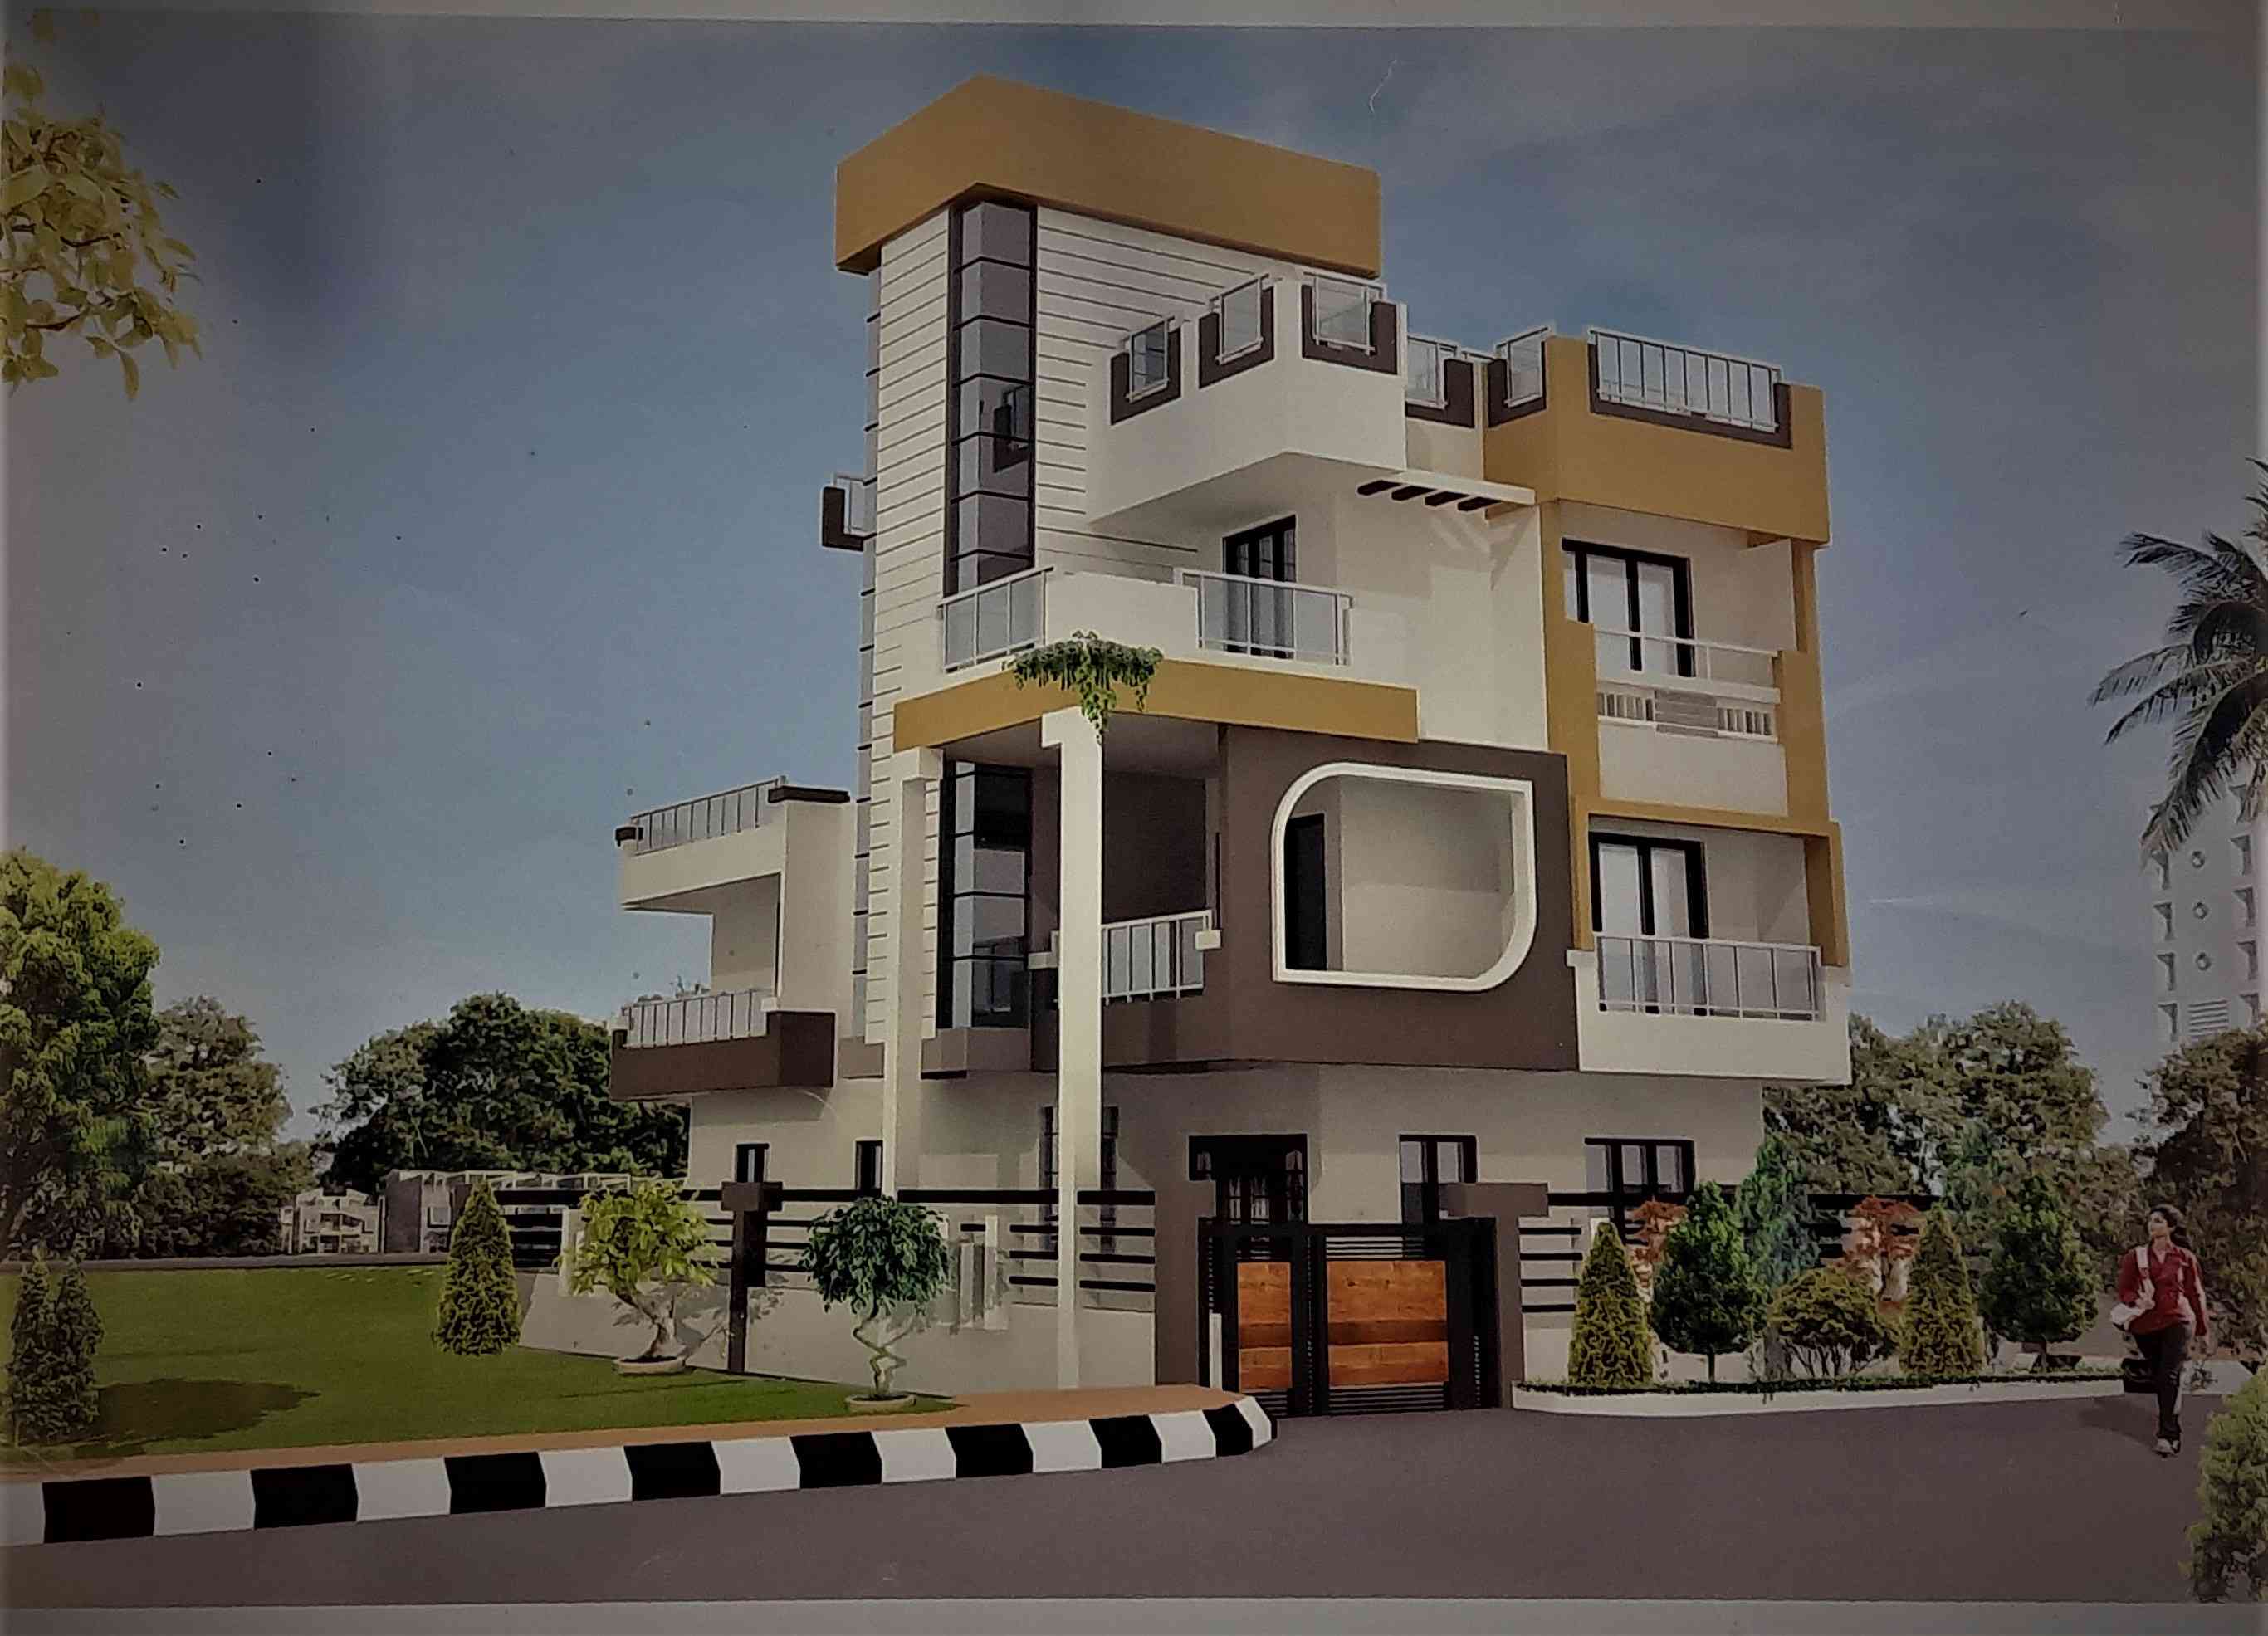 House 3D Exterior Design